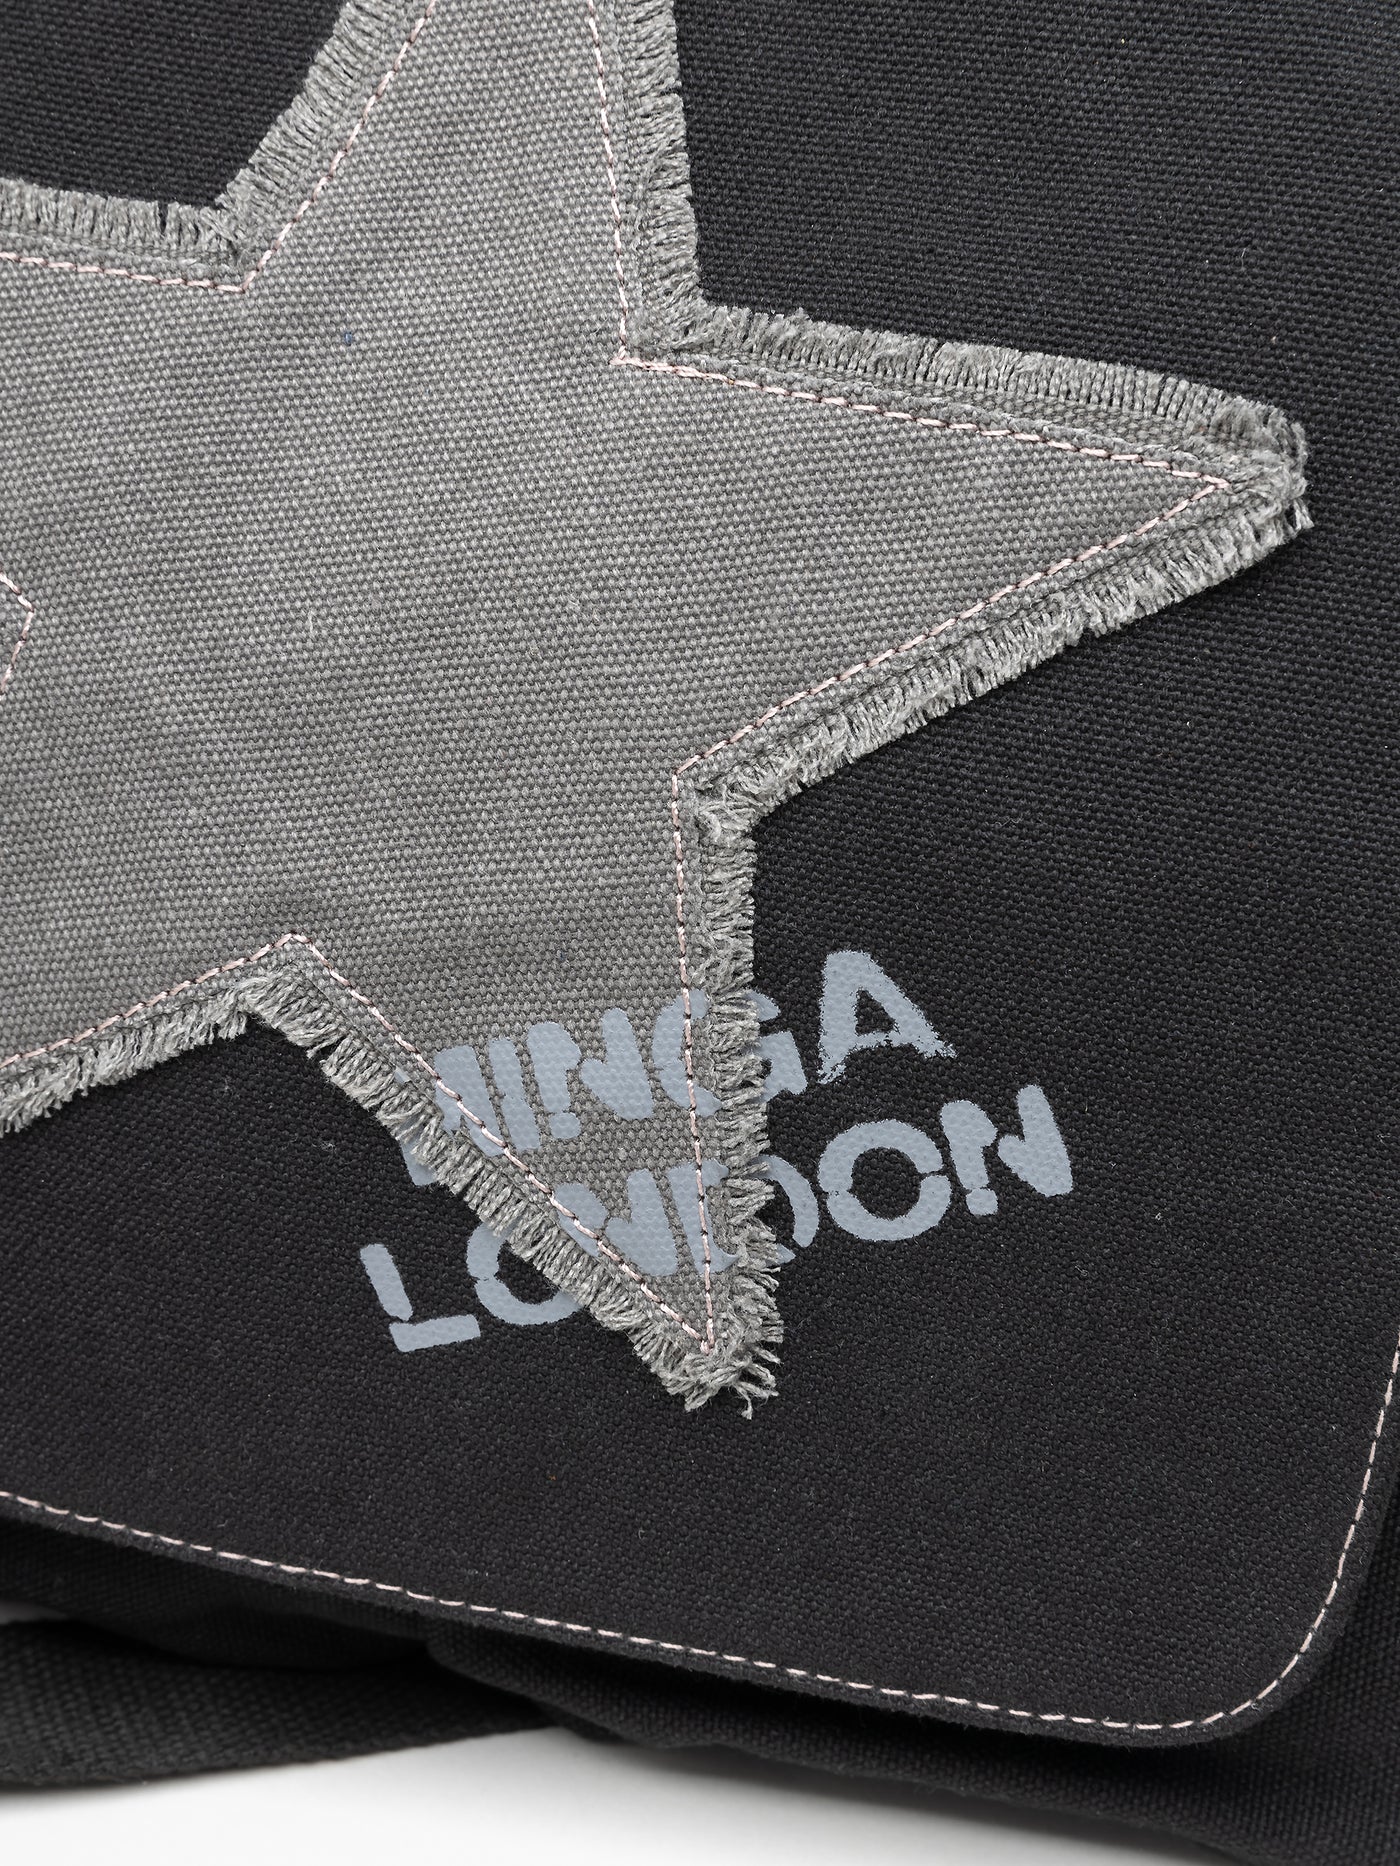 Super Star Black Canvas Messenger Bag - Minga London